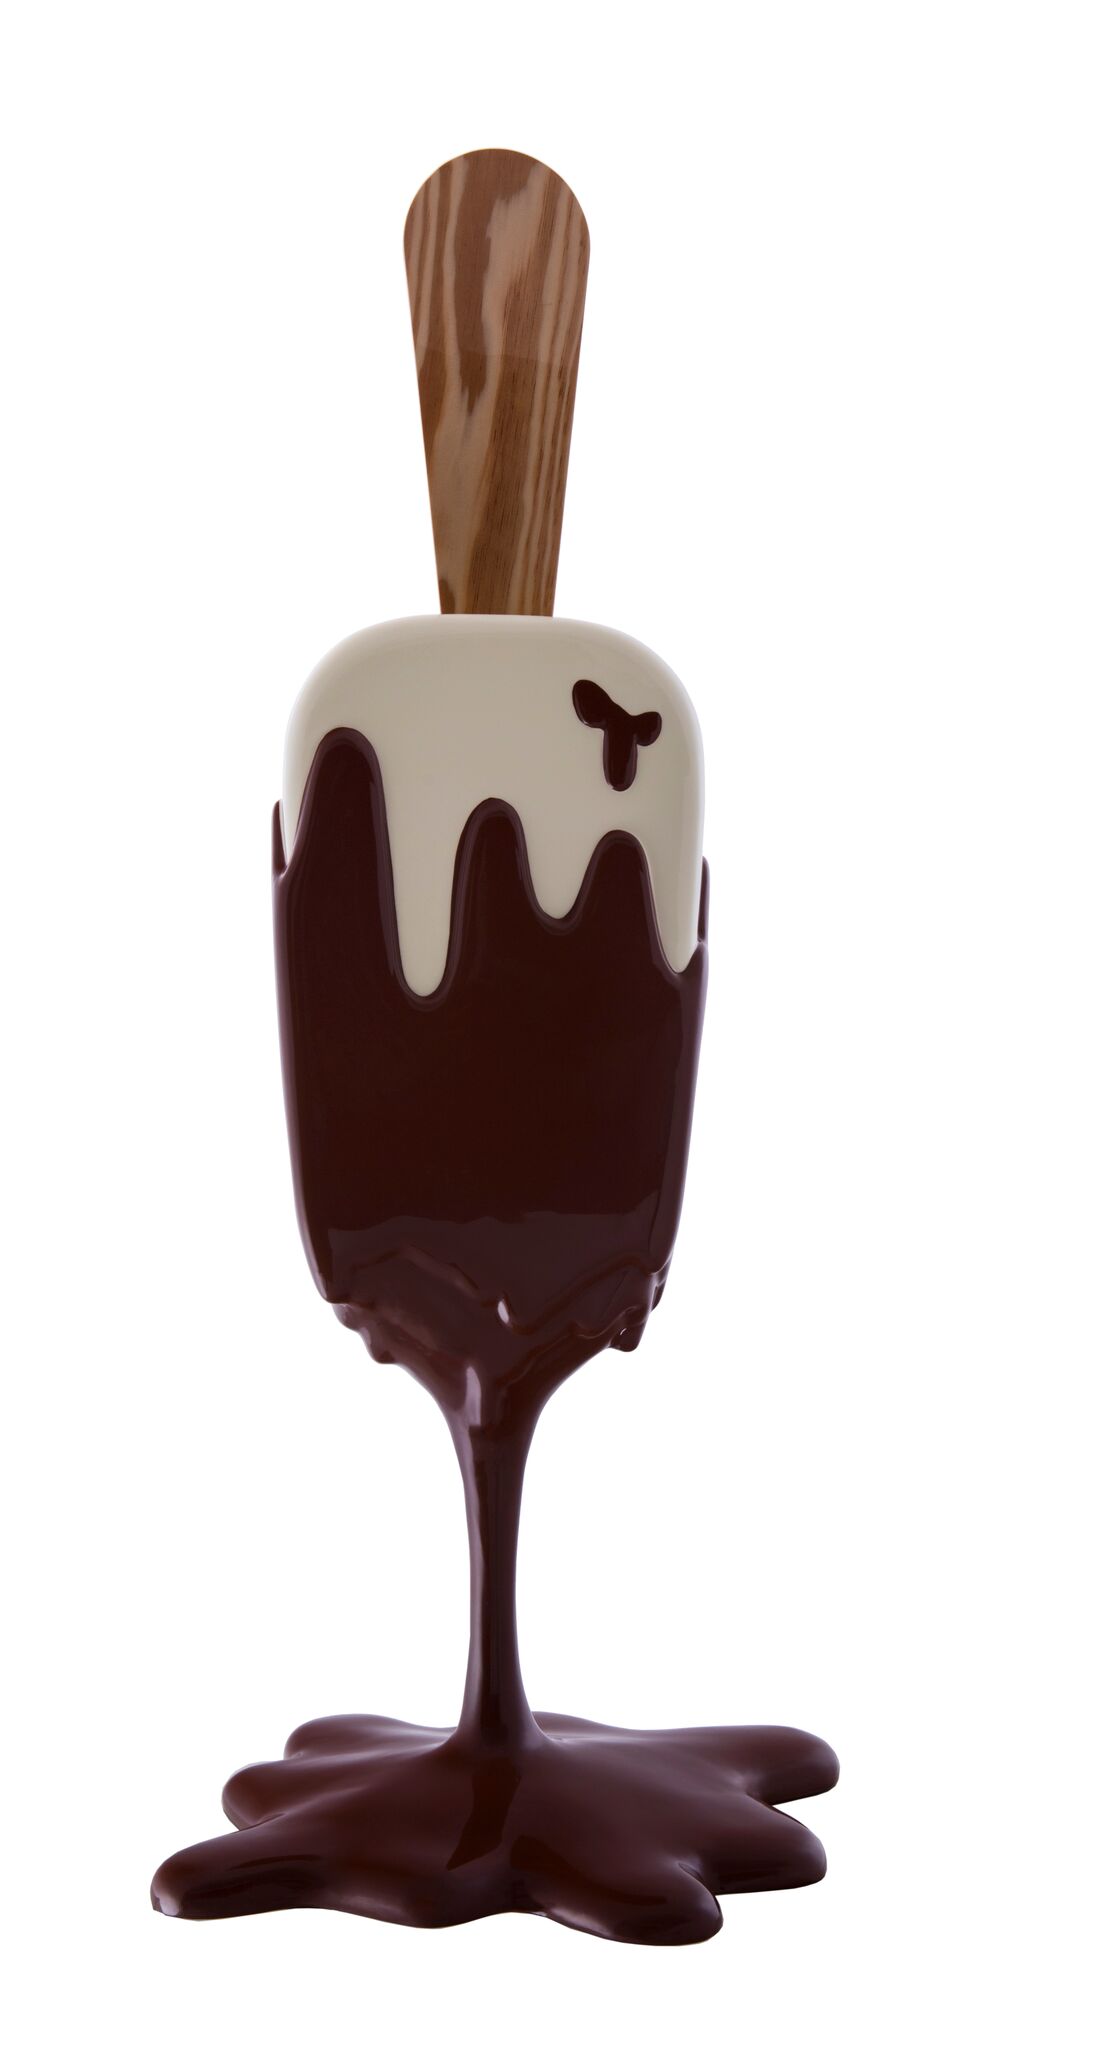 Vanilla chocolate ice cream pop art sculpture